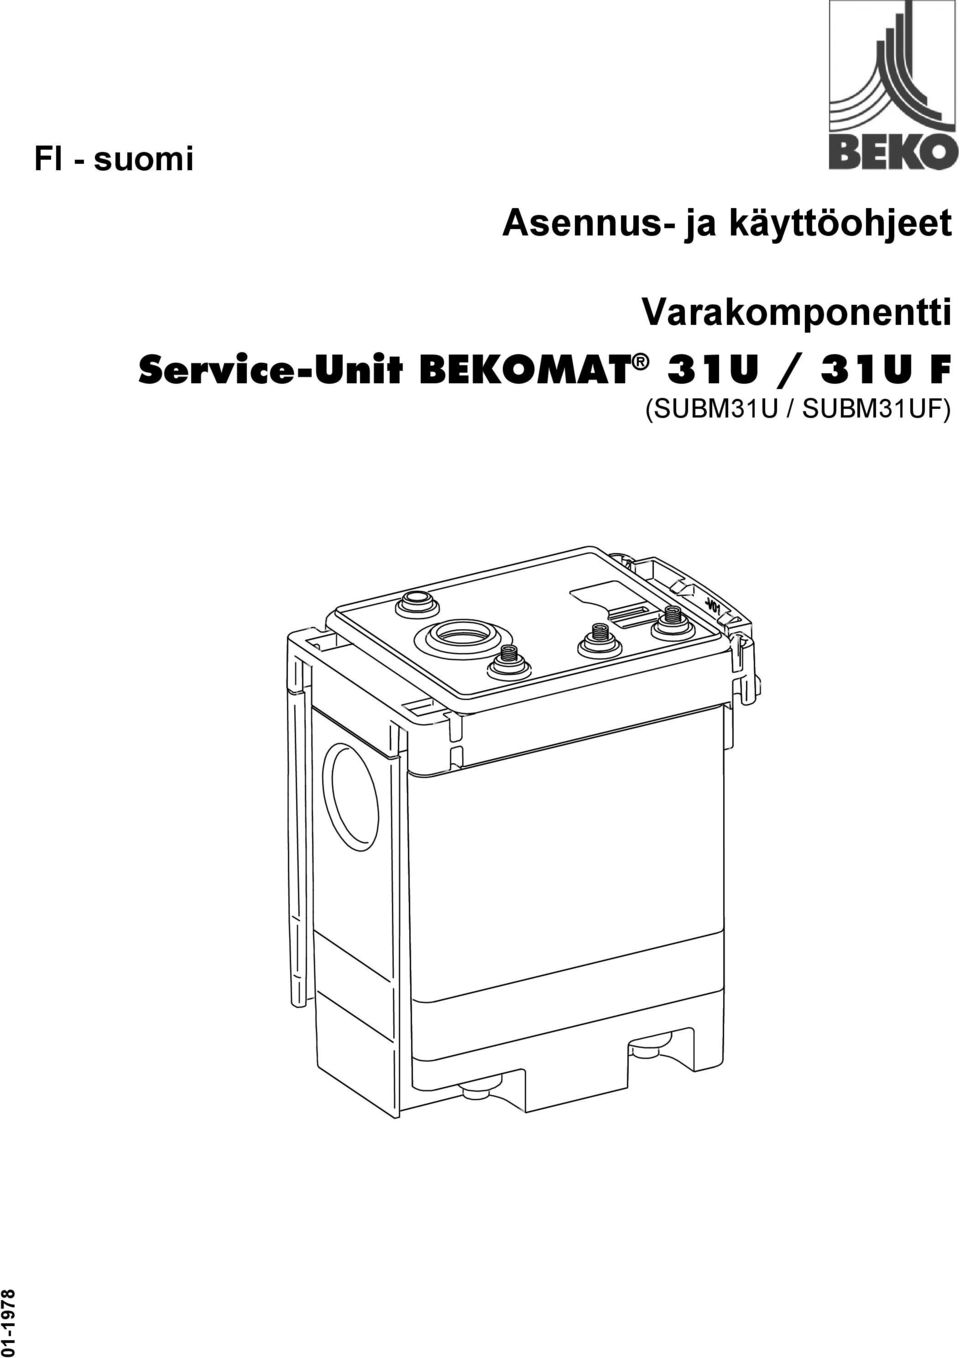 Service-Unit BEKOMAT 31U /